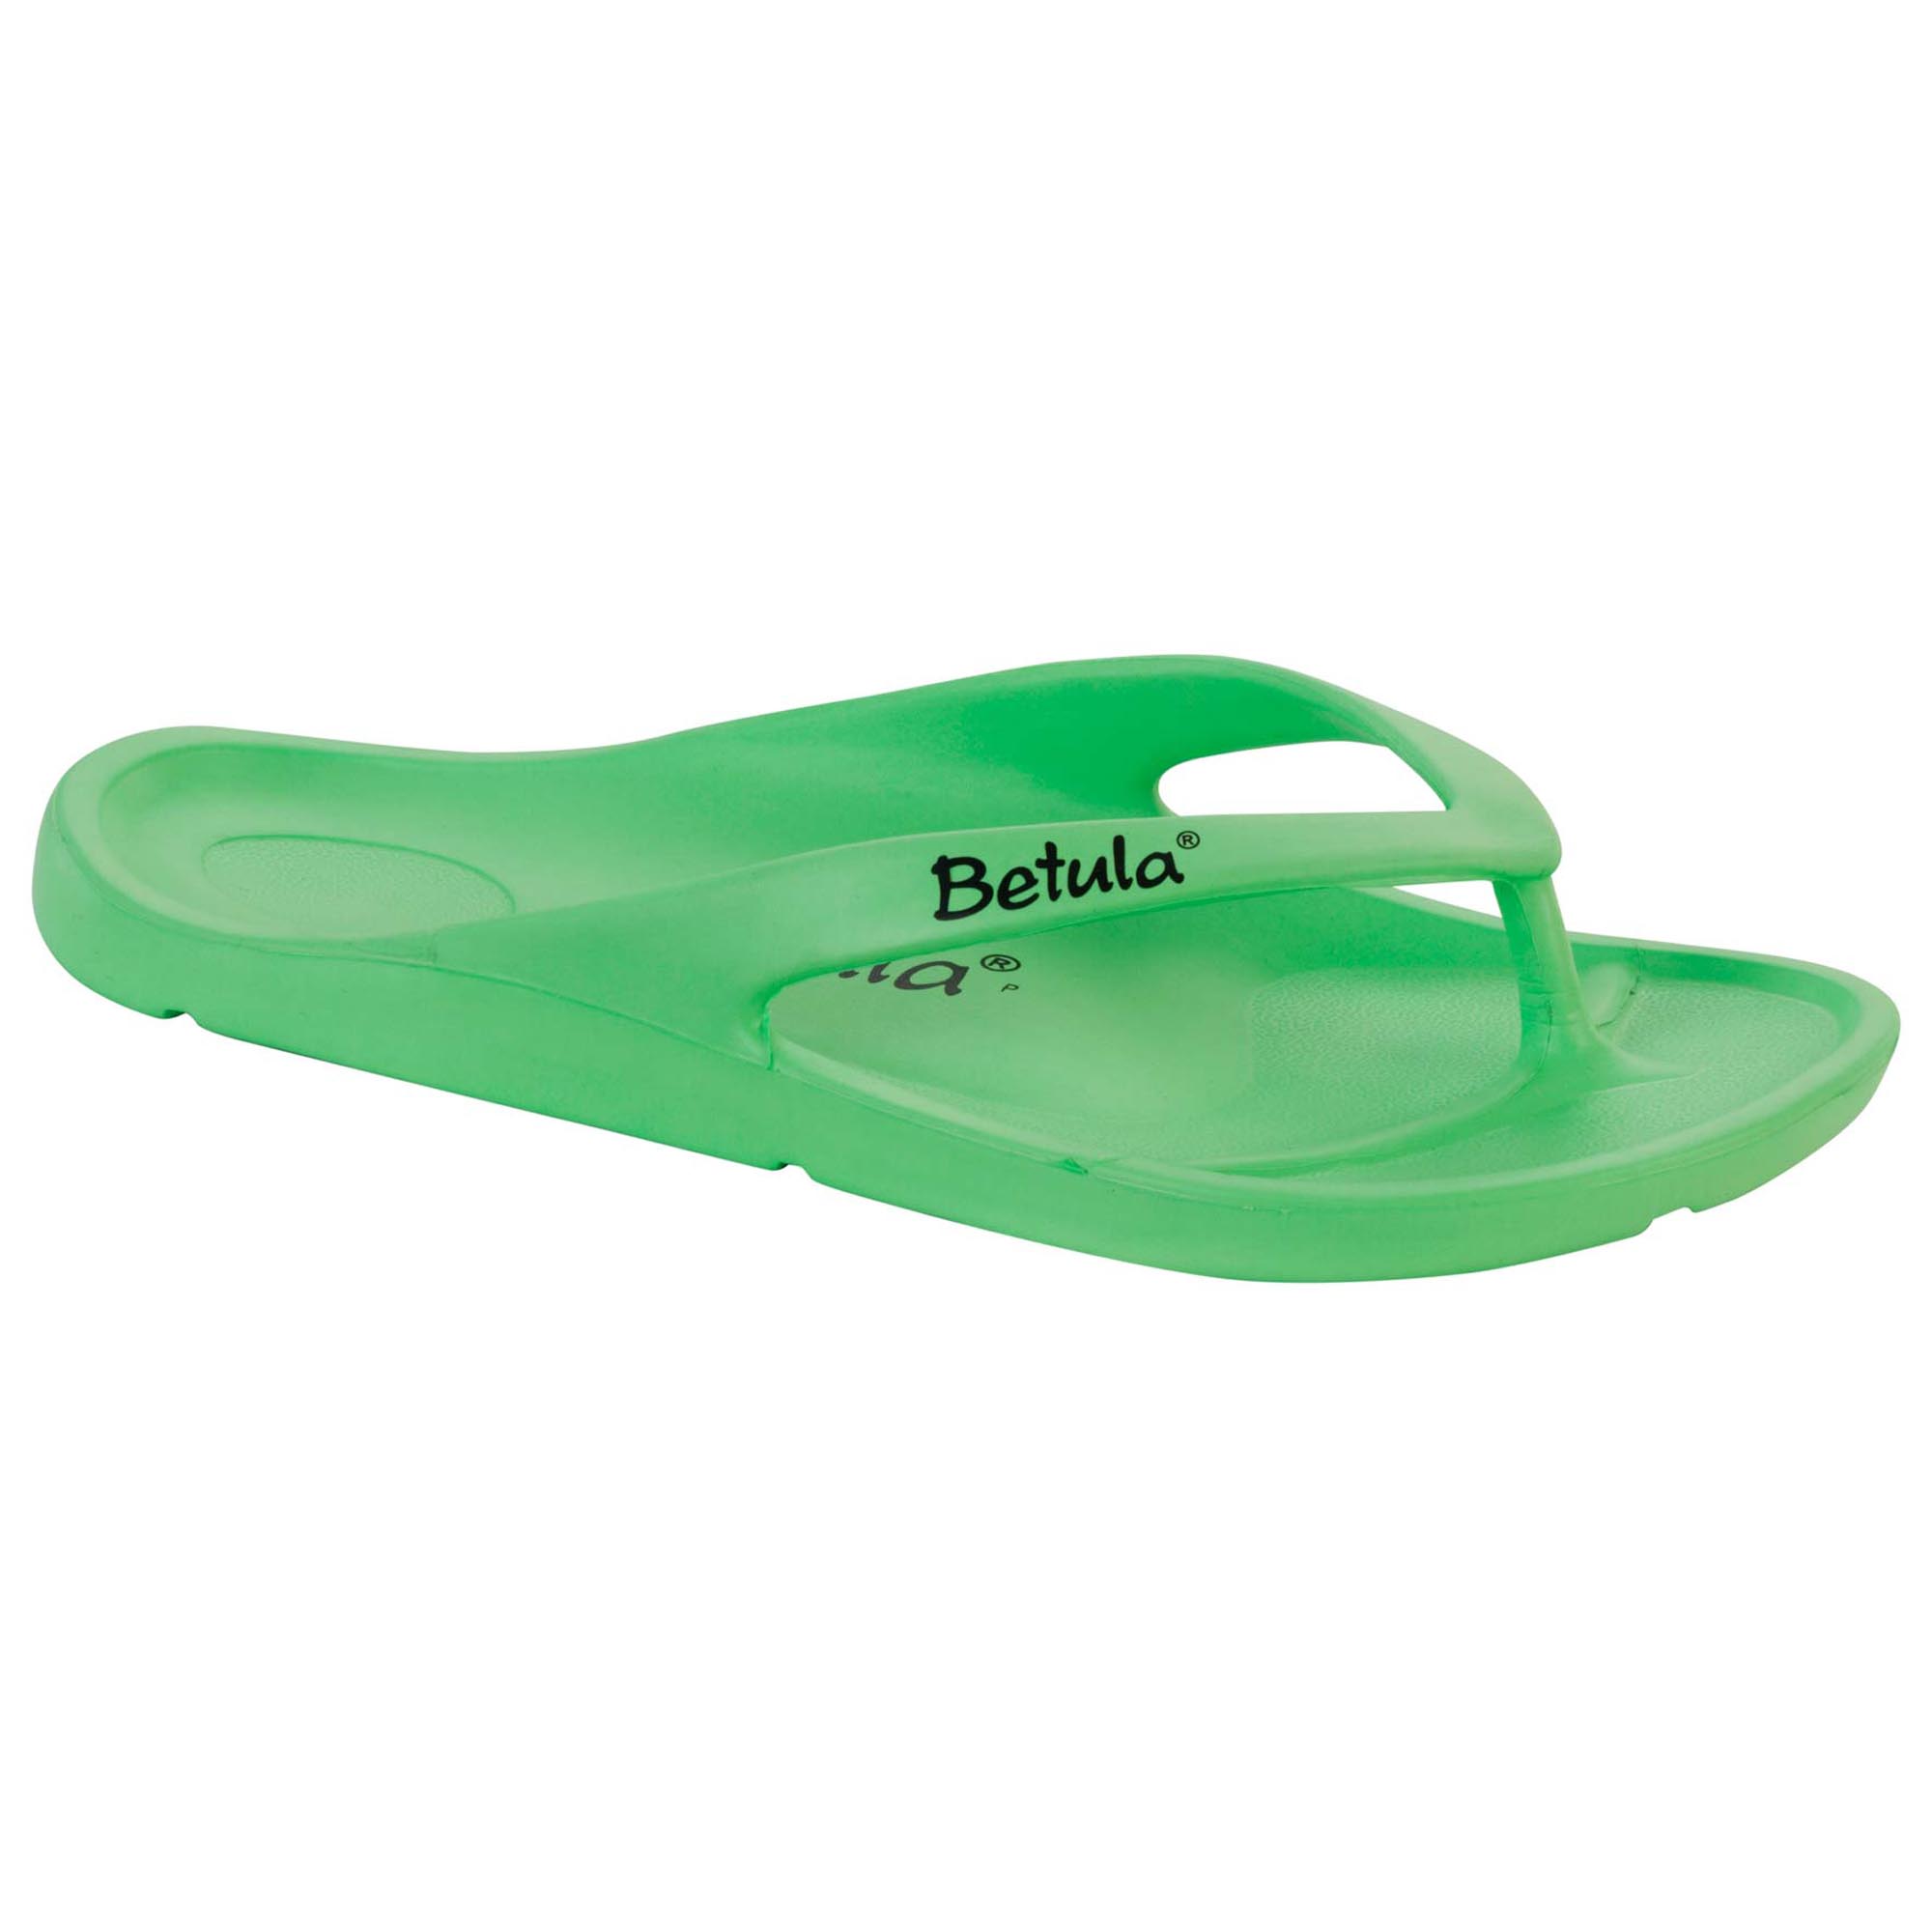 betula energy slippers